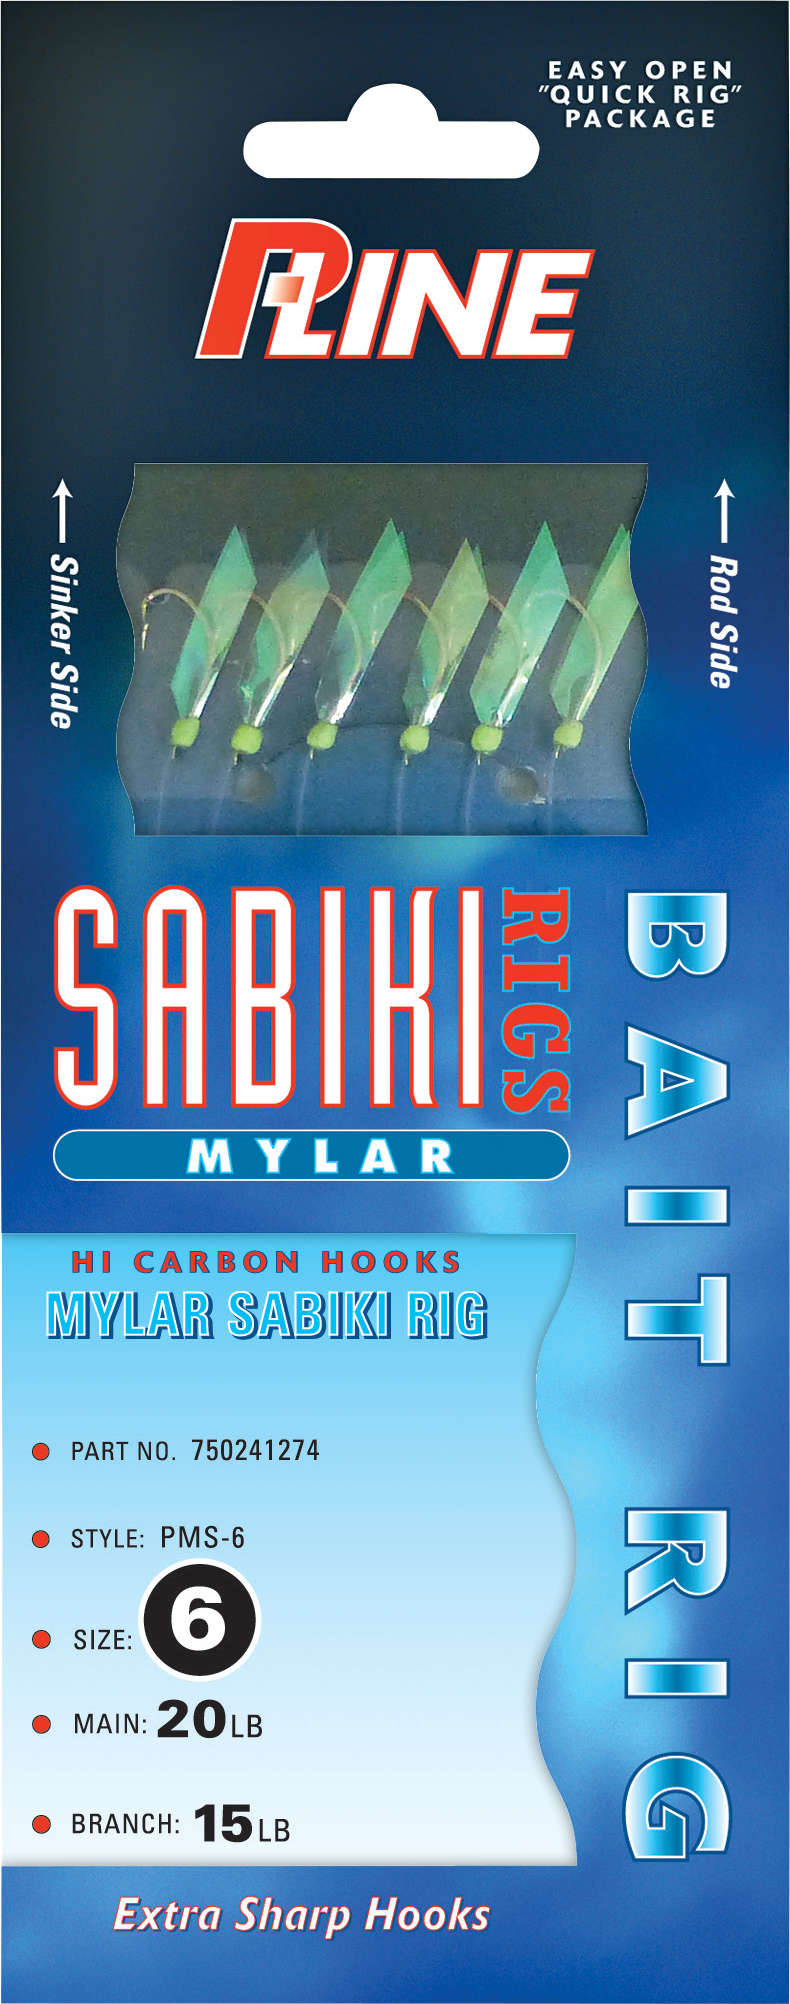 P-Line Mylar Sabiki Rigs - 10